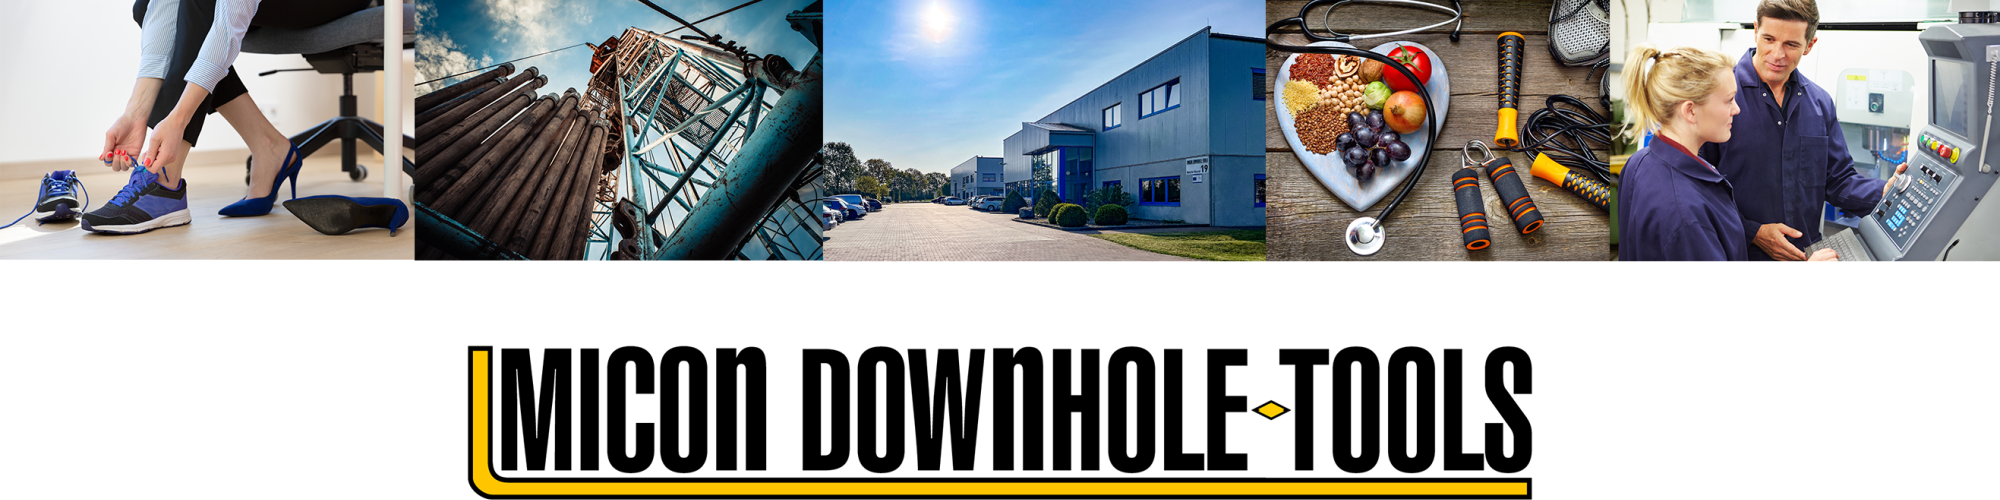 MICON Downhole-Tools GmbH